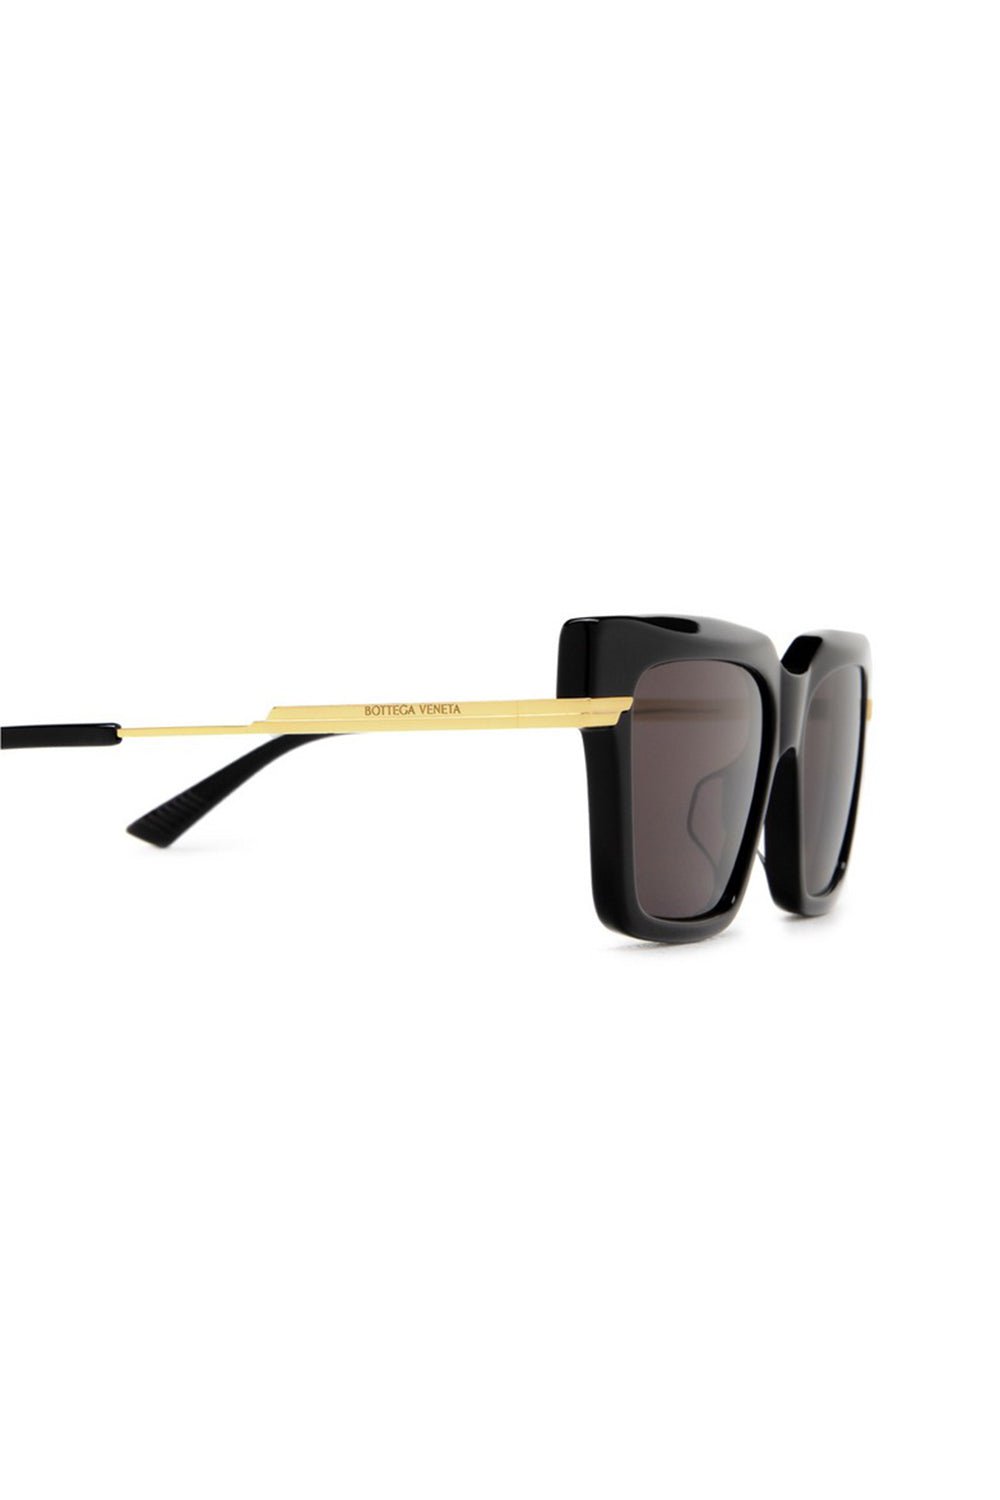 BOTTEGA VENETA-Square Sunglasses-BLACK/GREY